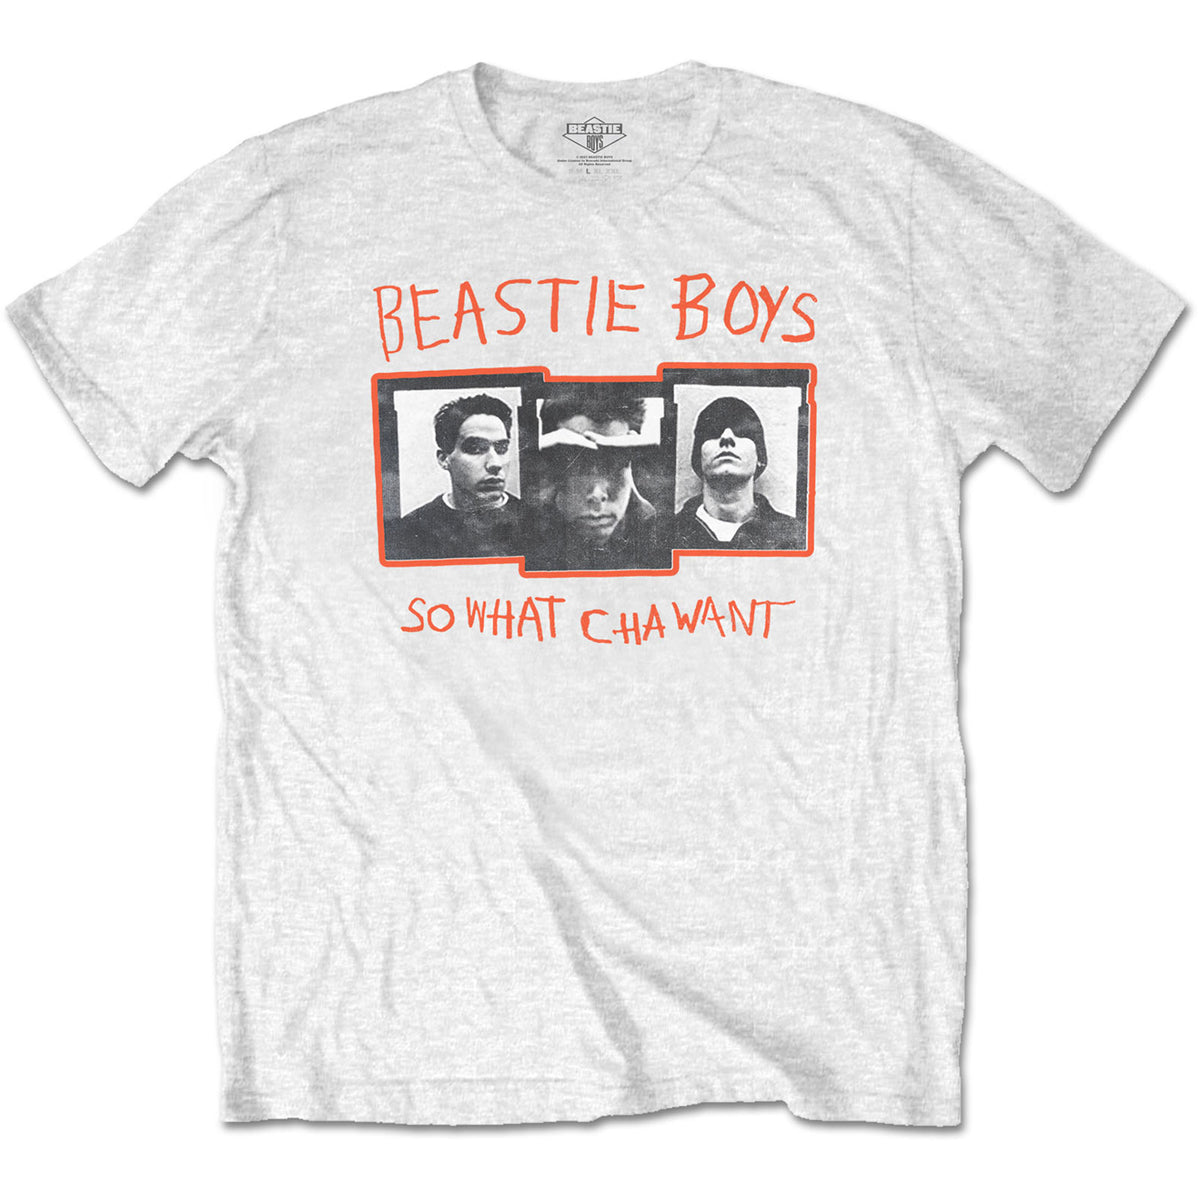 Beastie Boys So What Cha Want White Tee